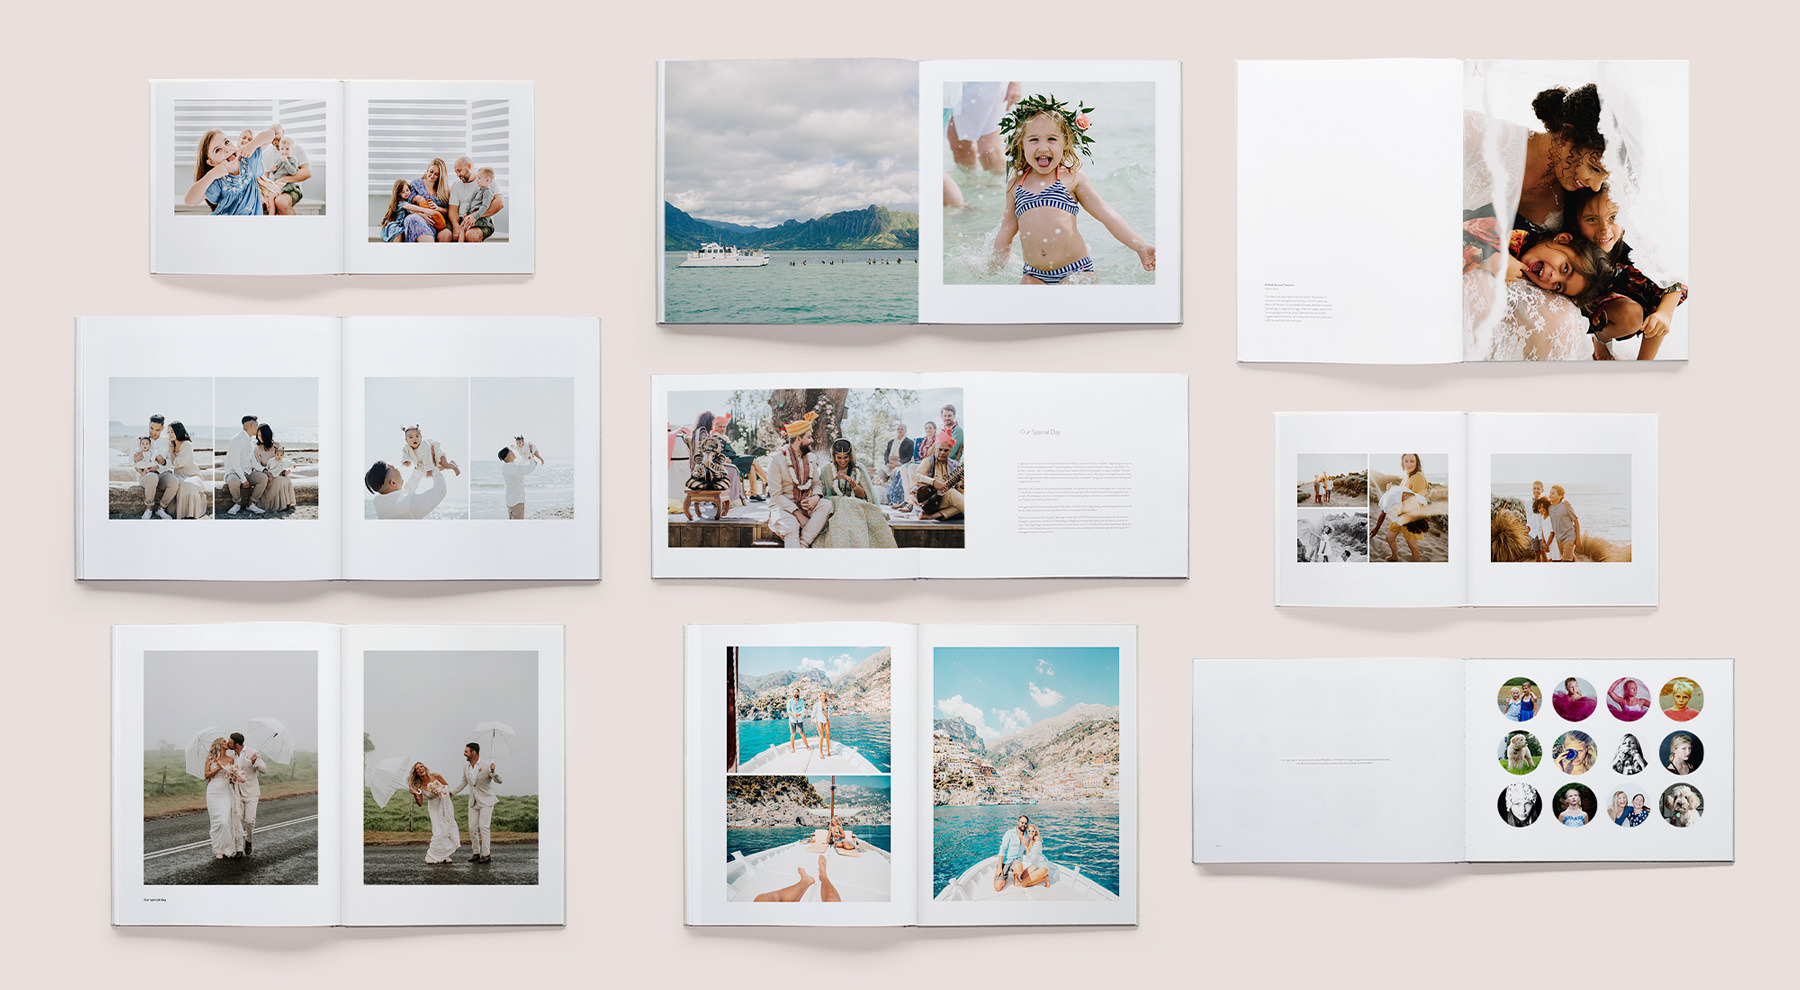 Nine open photo books showing MILK design templates